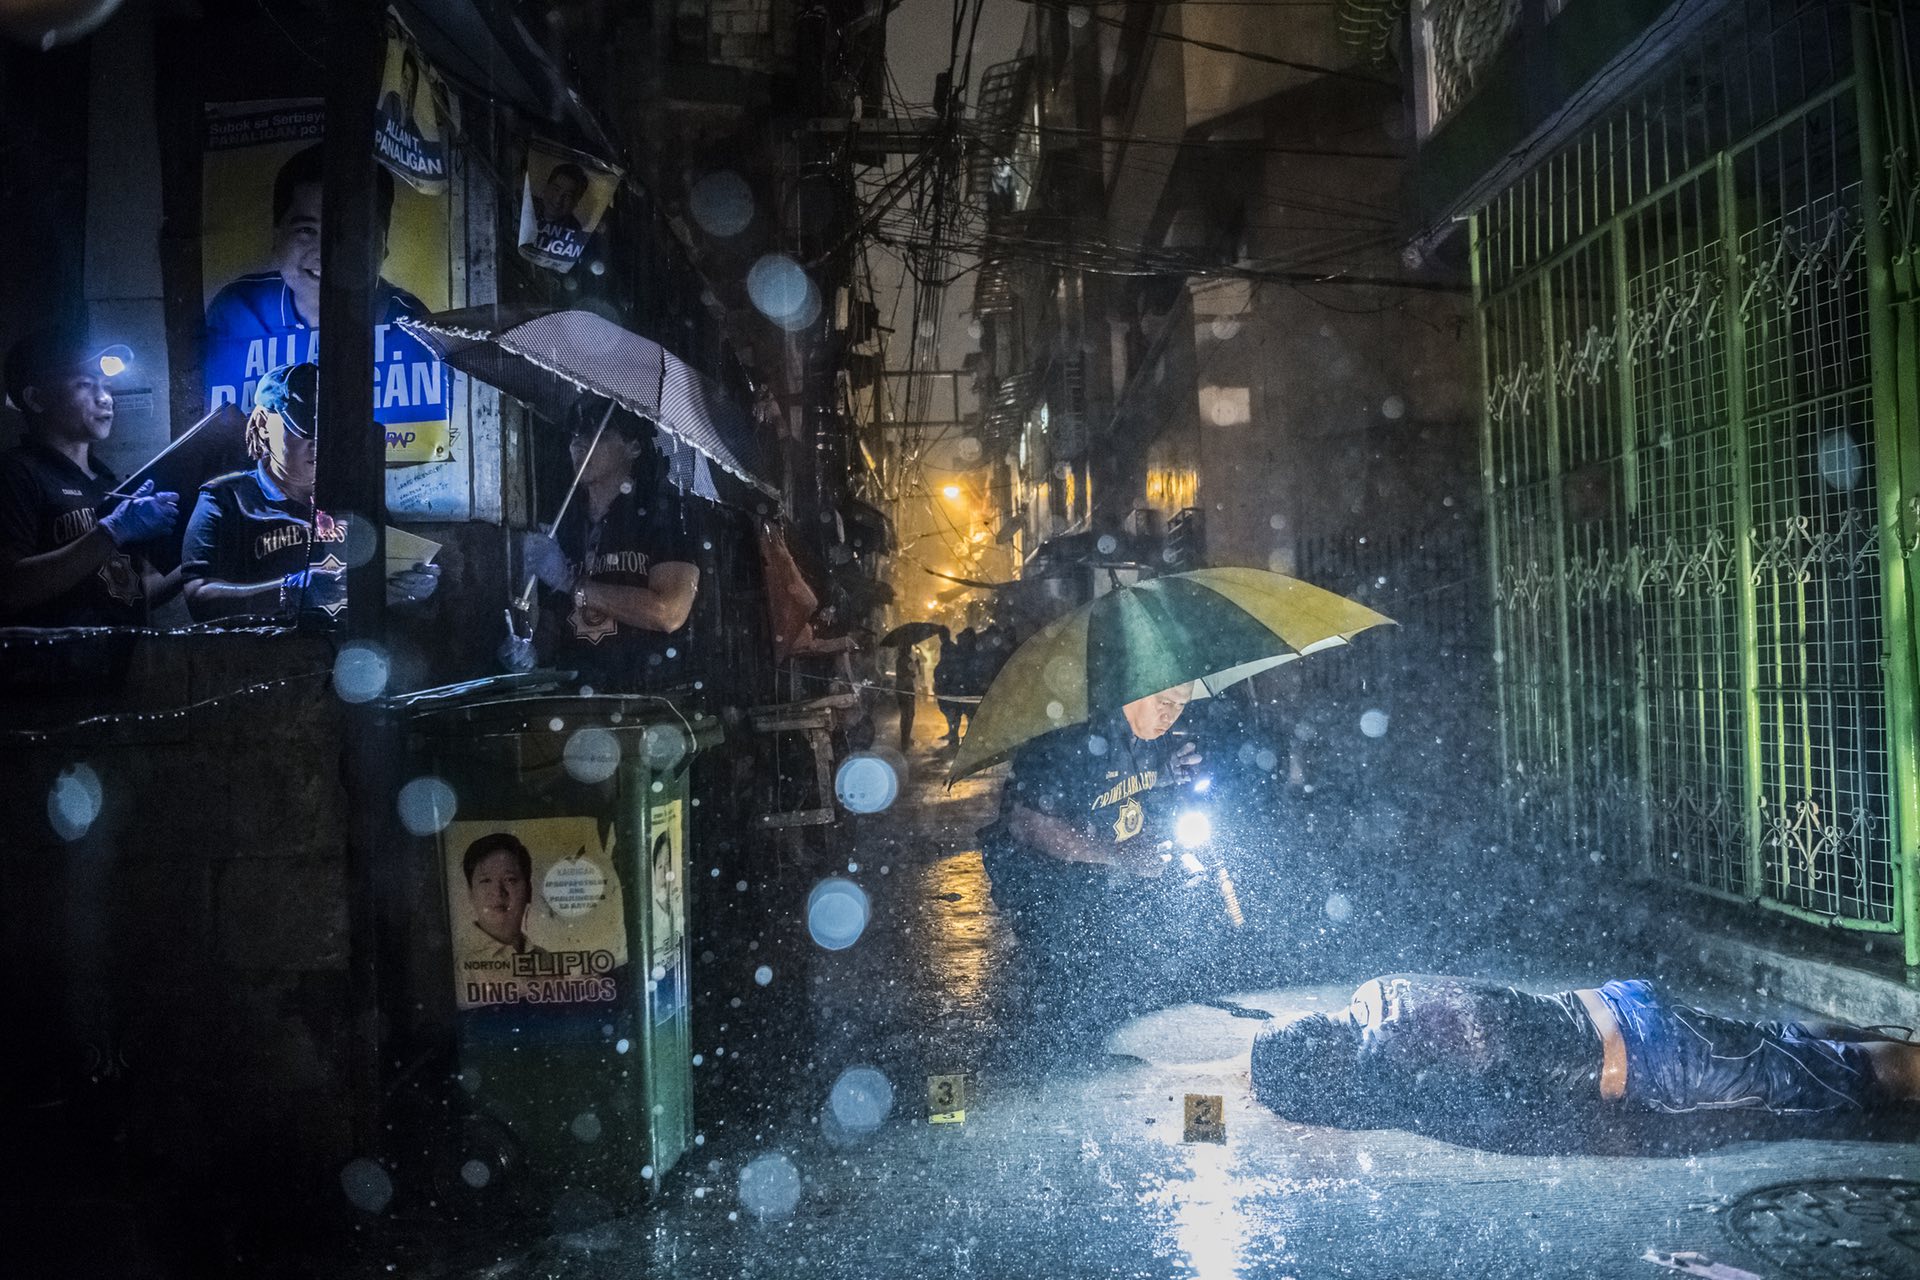 General news â stories, first prize Police inspect an alley where a victim was killed by two unidentified gunmen in Manila, Philippines Photograph: Daniel Berehulak/AP